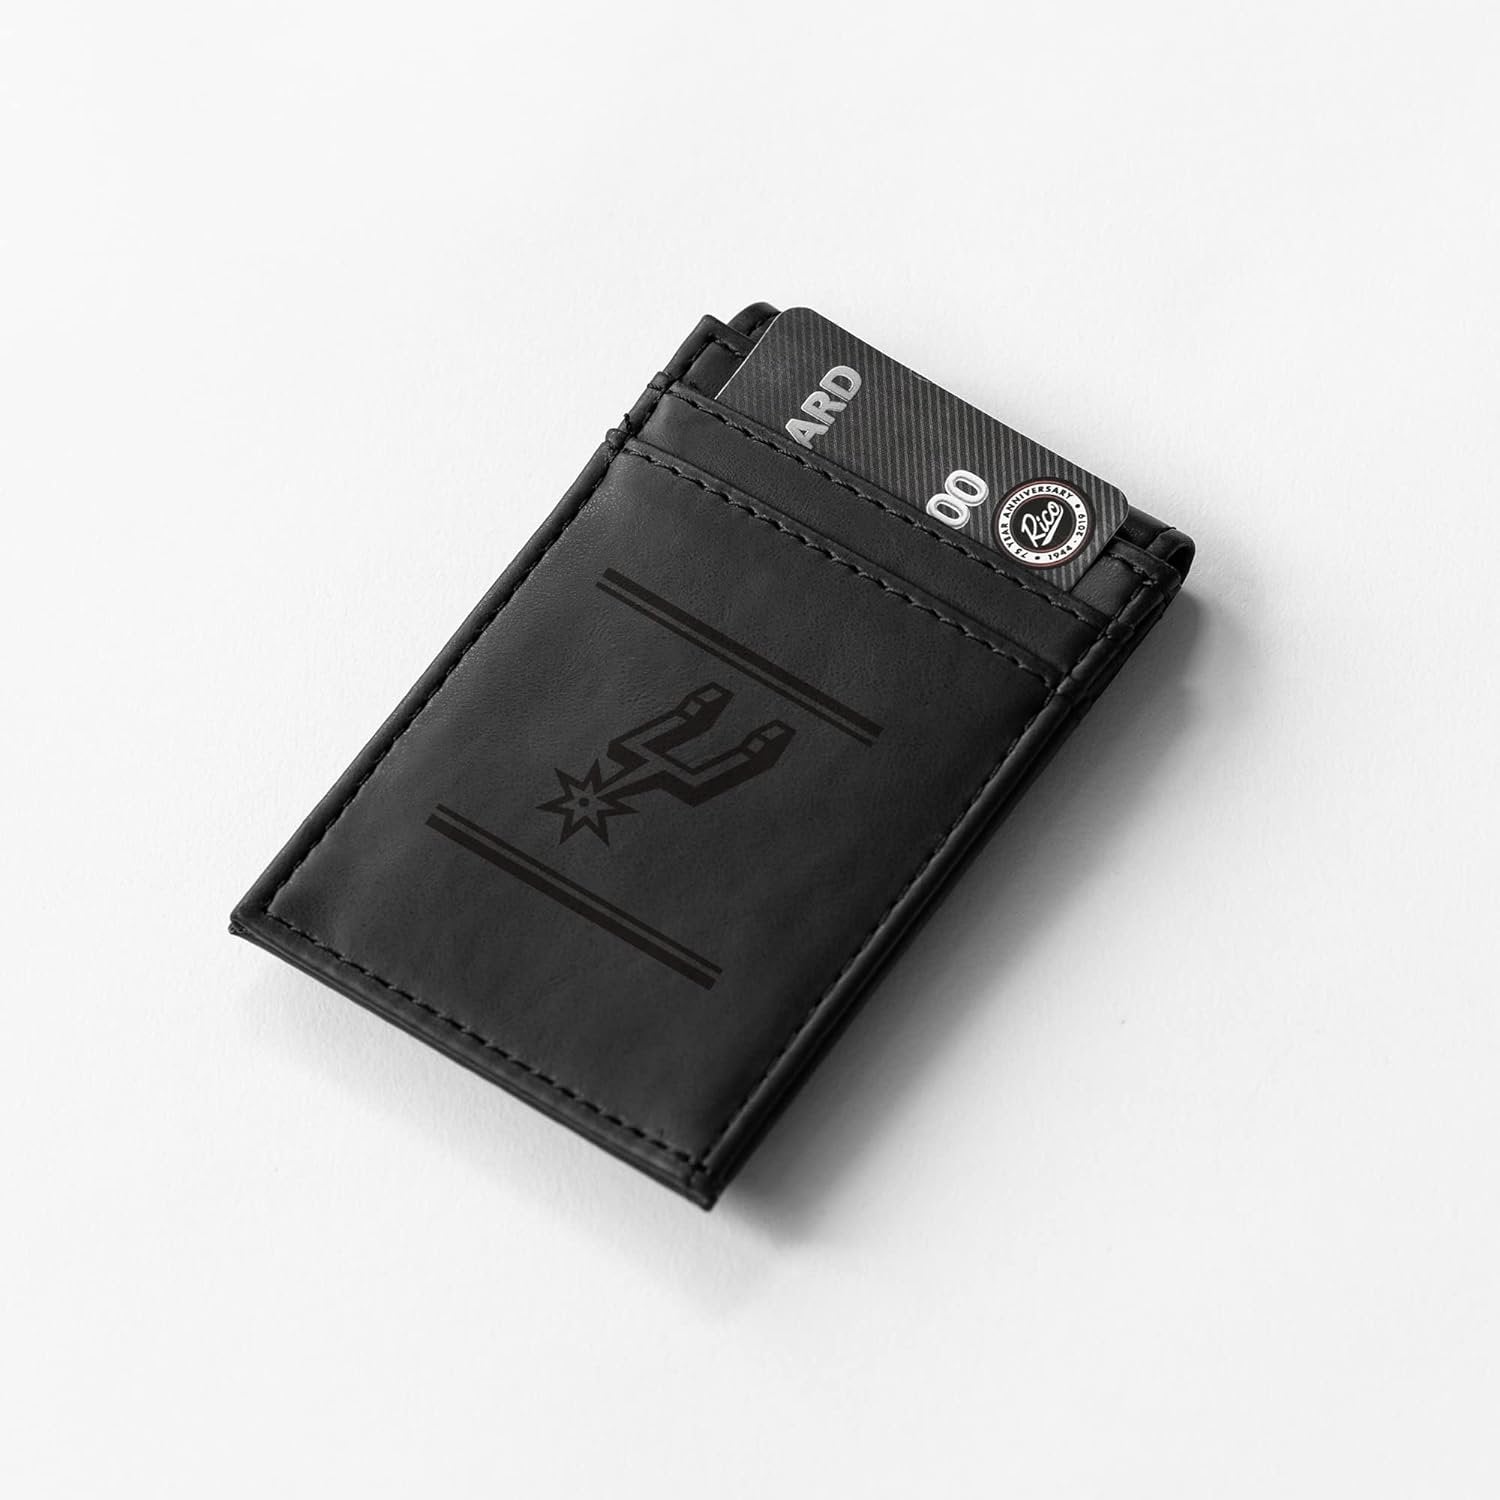 San Antonio Spurs Premium Black Leather Wallet, Front Pocket Magnetic Money Clip, Laser Engraved, Vegan